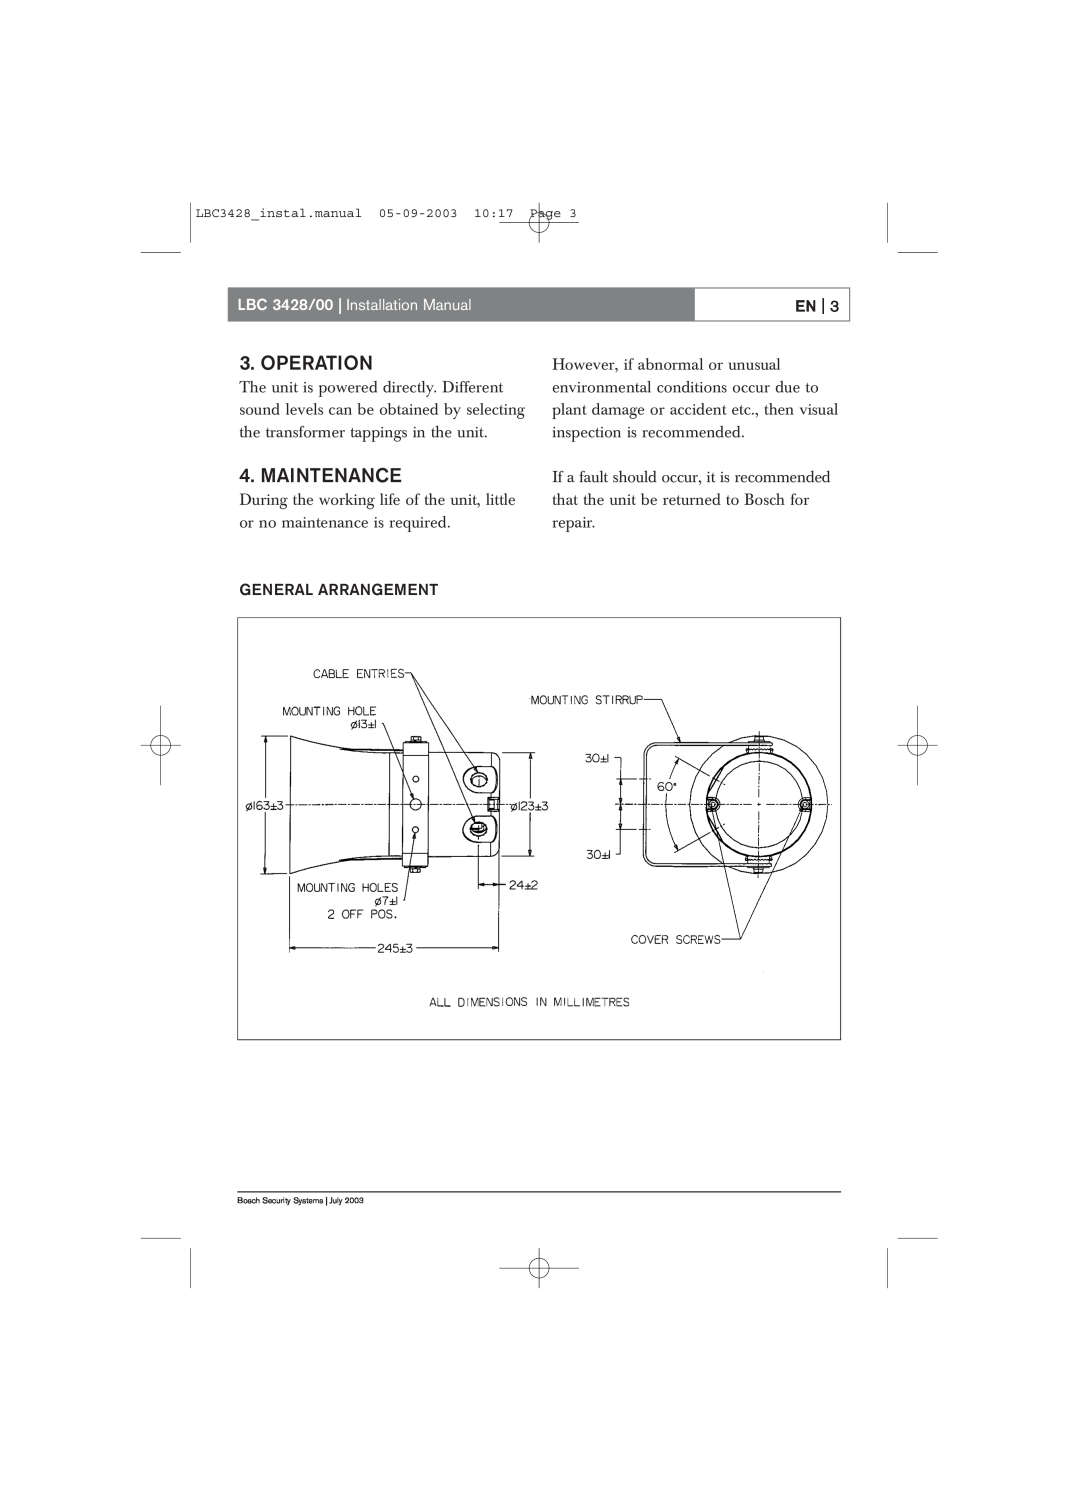 Bosch Appliances installation manual Operation, Maintenance, General Arrangement, LBC 3428/00 Installation Manual, En 